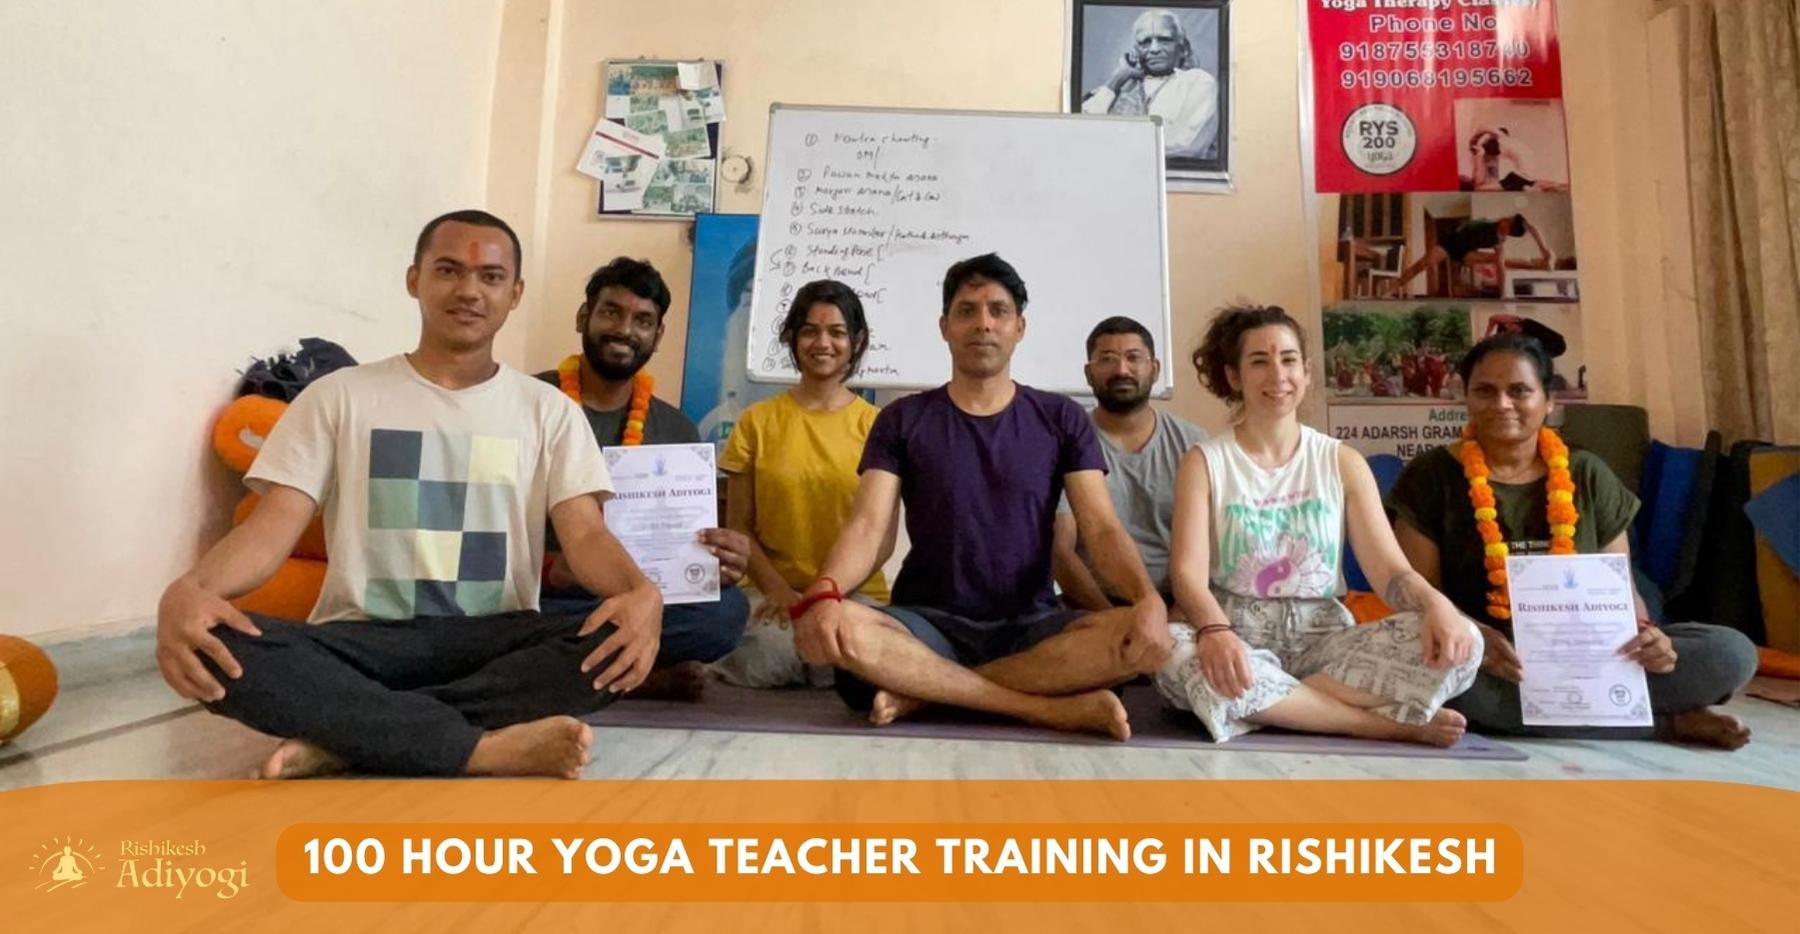 100 Hour Yoga Teacher Training In Rishikesh - Rishikesh Adiyogi